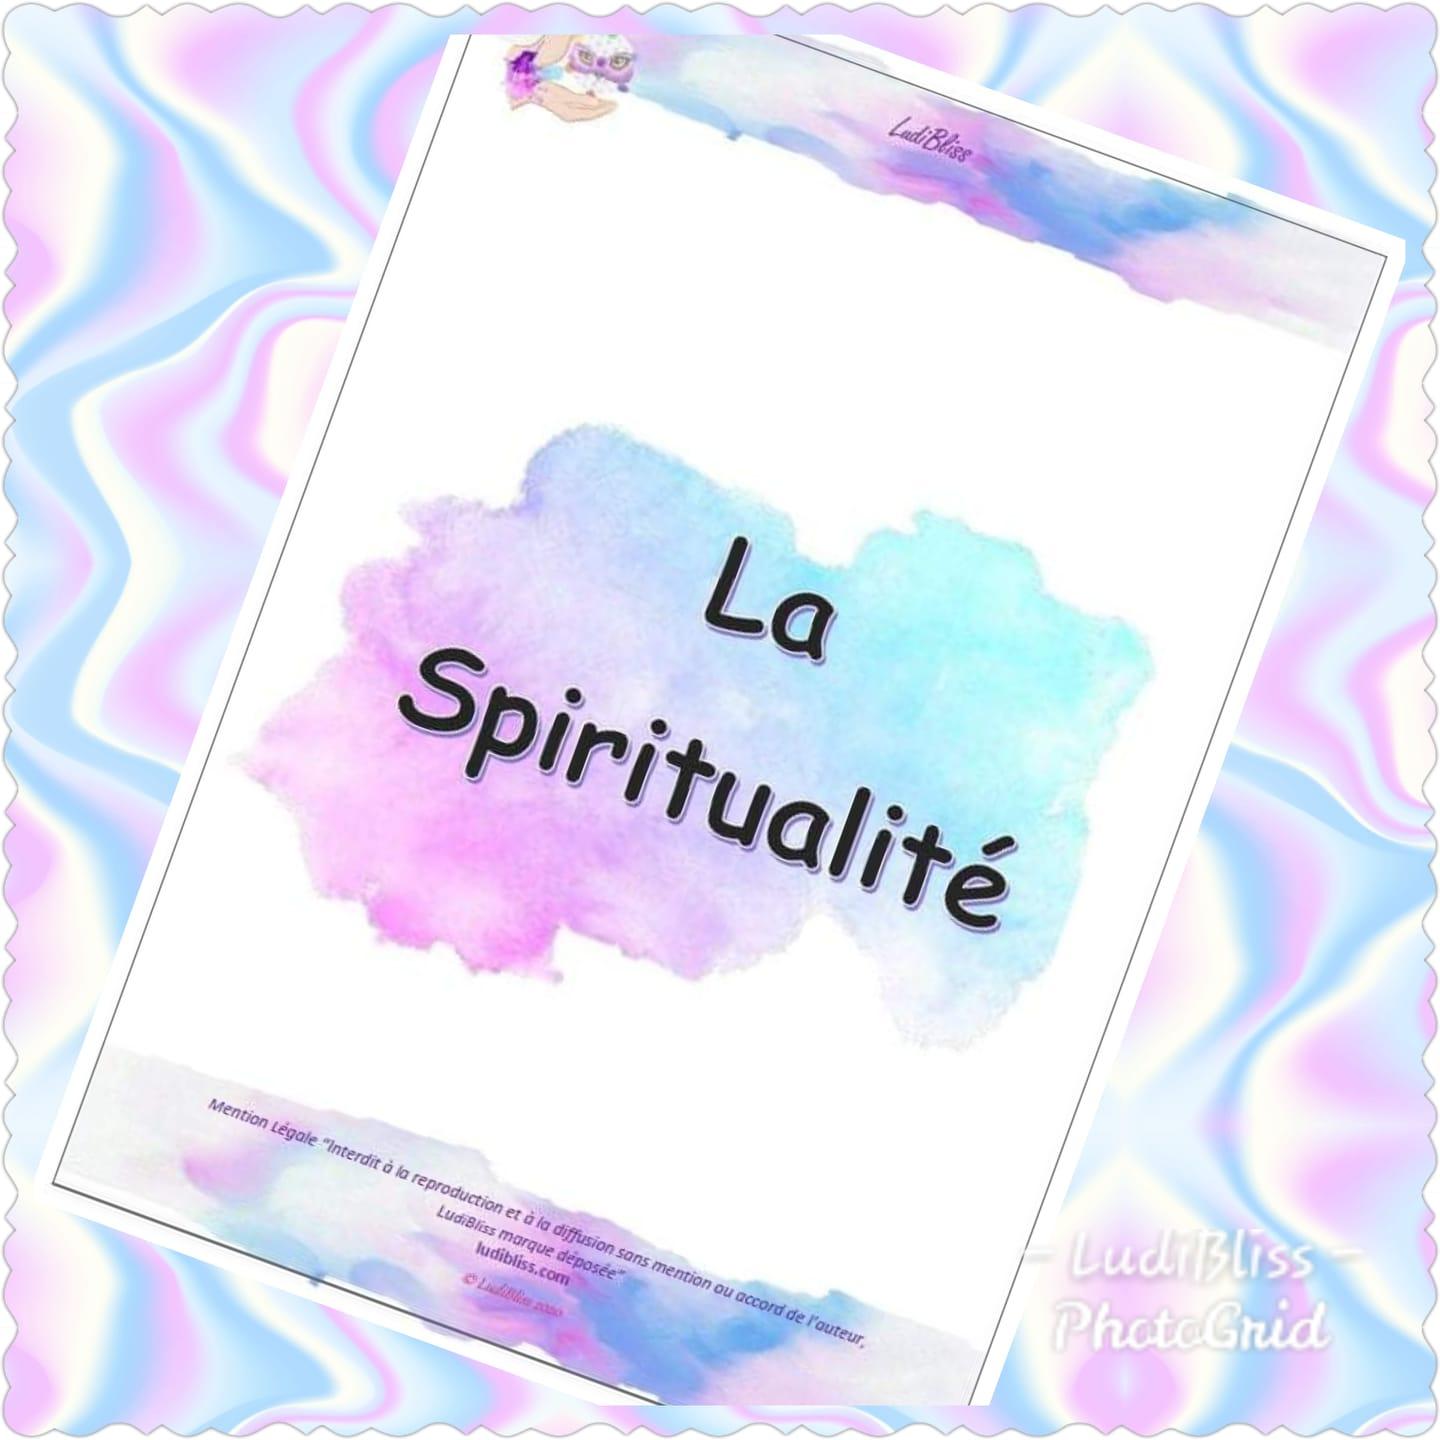 La spiritualite 2